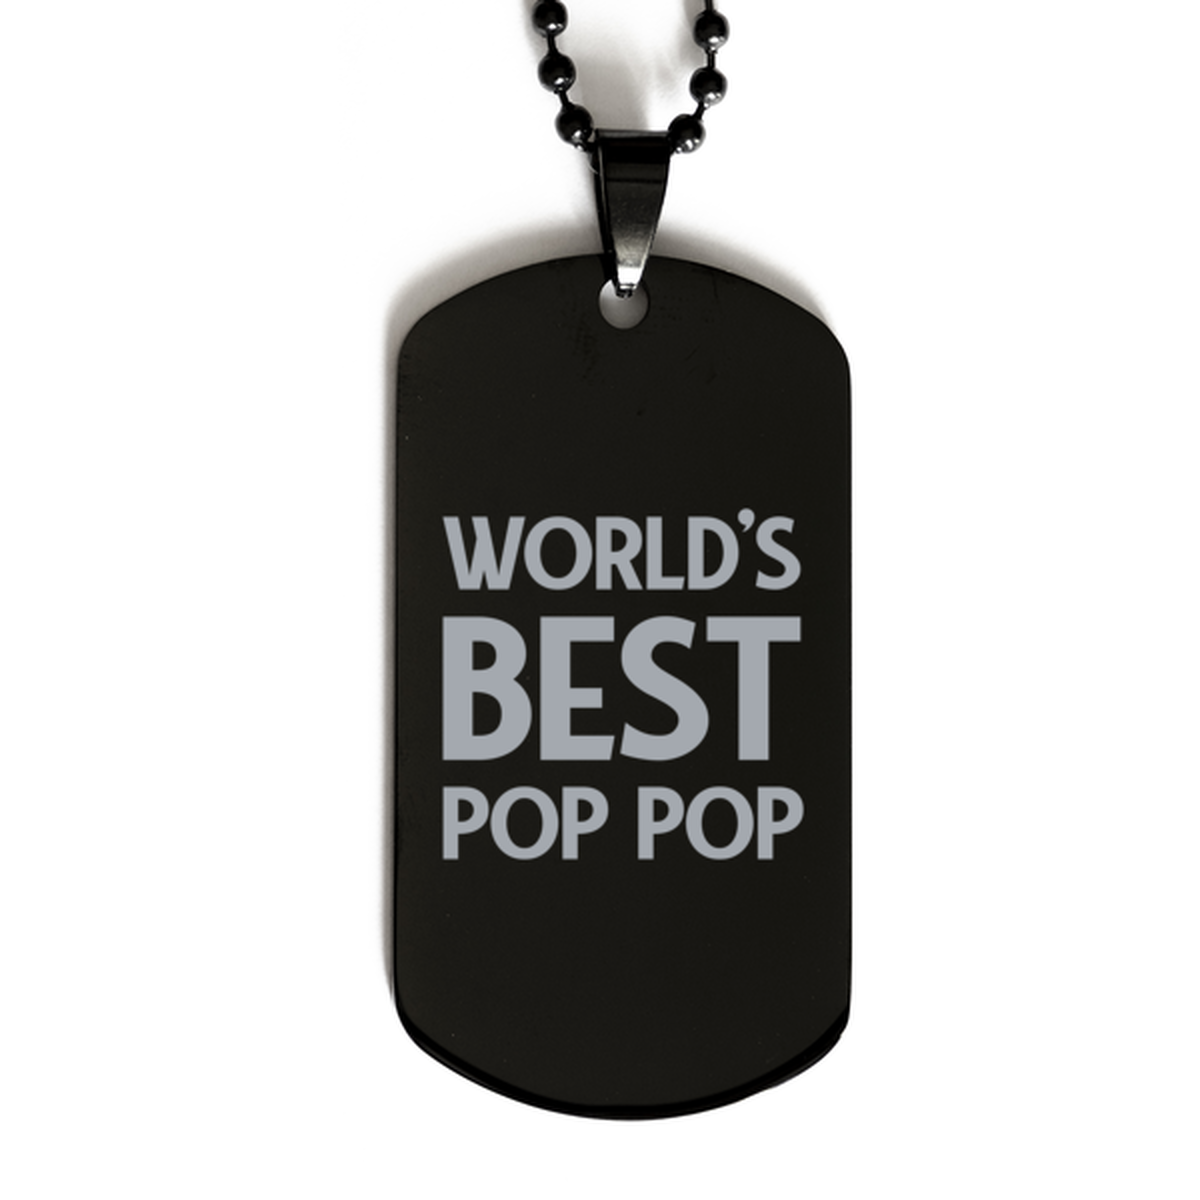 Worlds Best Pop Pop Gifts, Funny Black Engraved Dog Tag For Pop Pop, Birthday Presents For Men